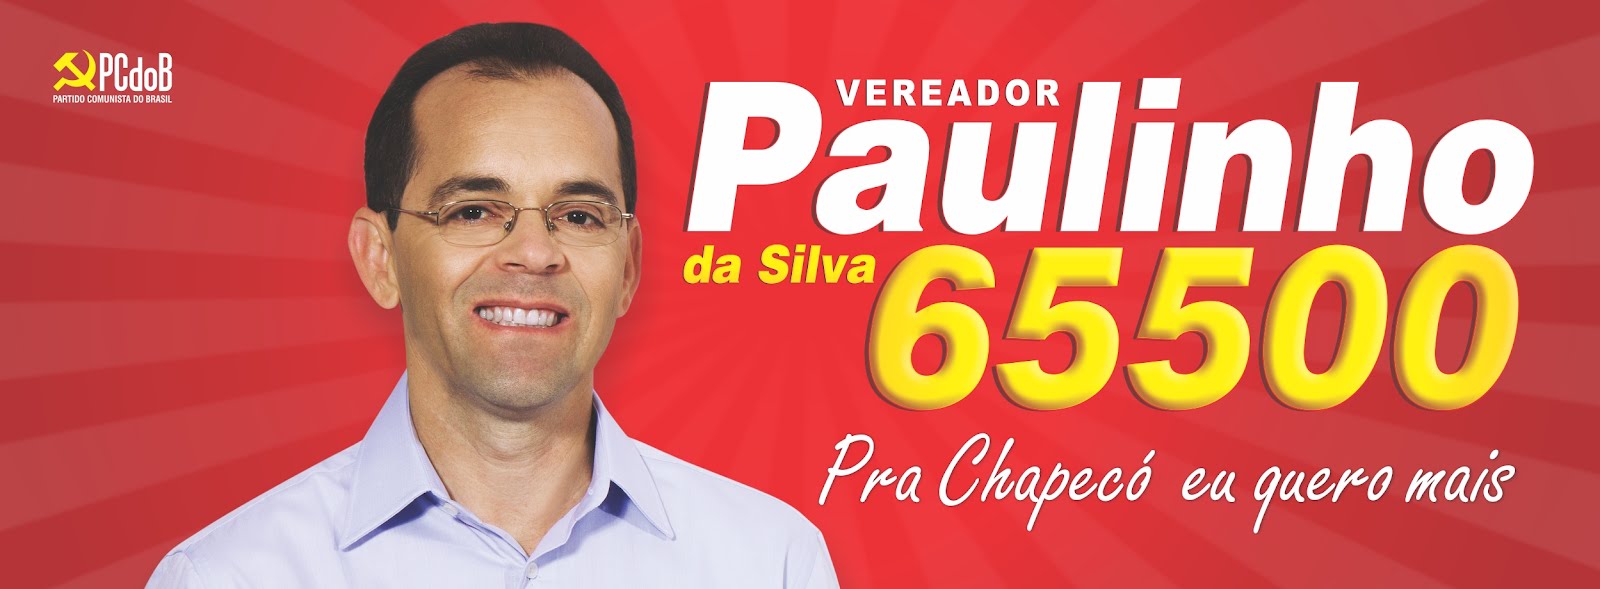 Paulinho da Silva 65500